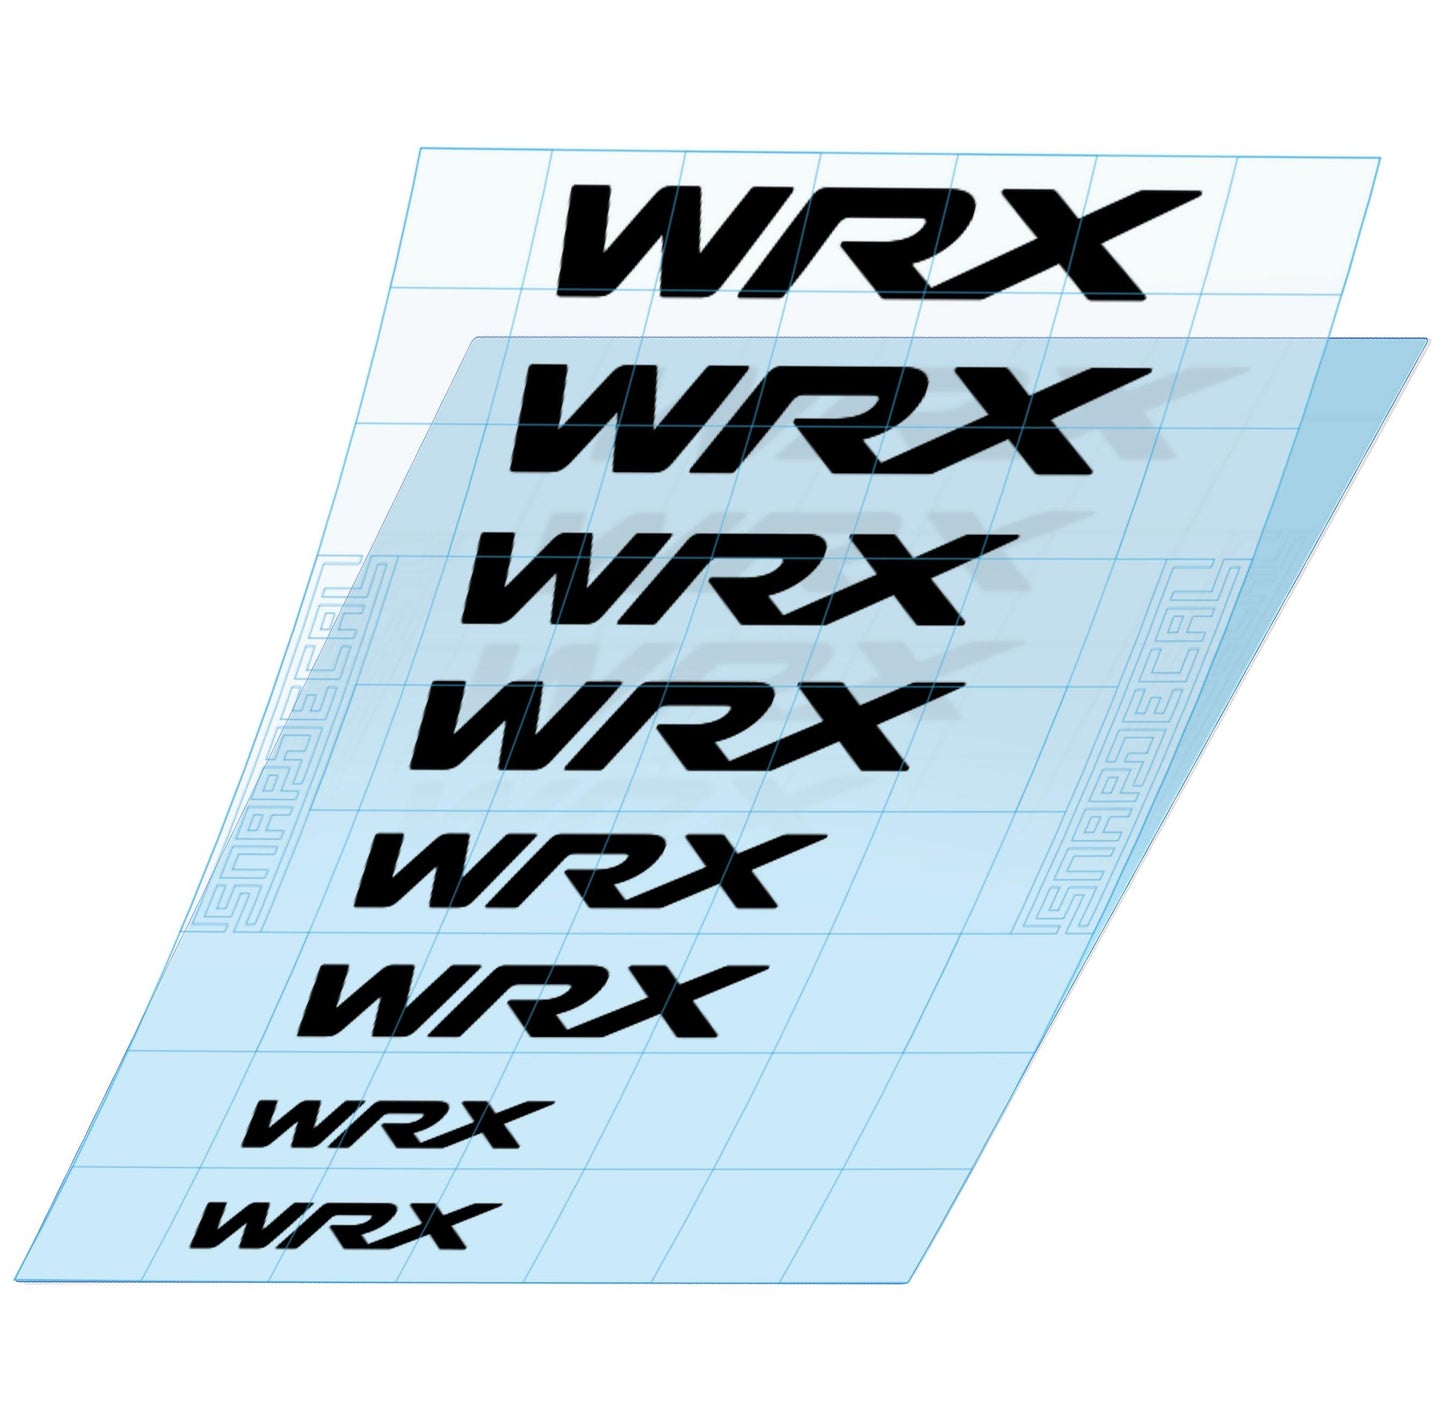 8 WRX Subaru Brake Caliper Decals - Snap Decal